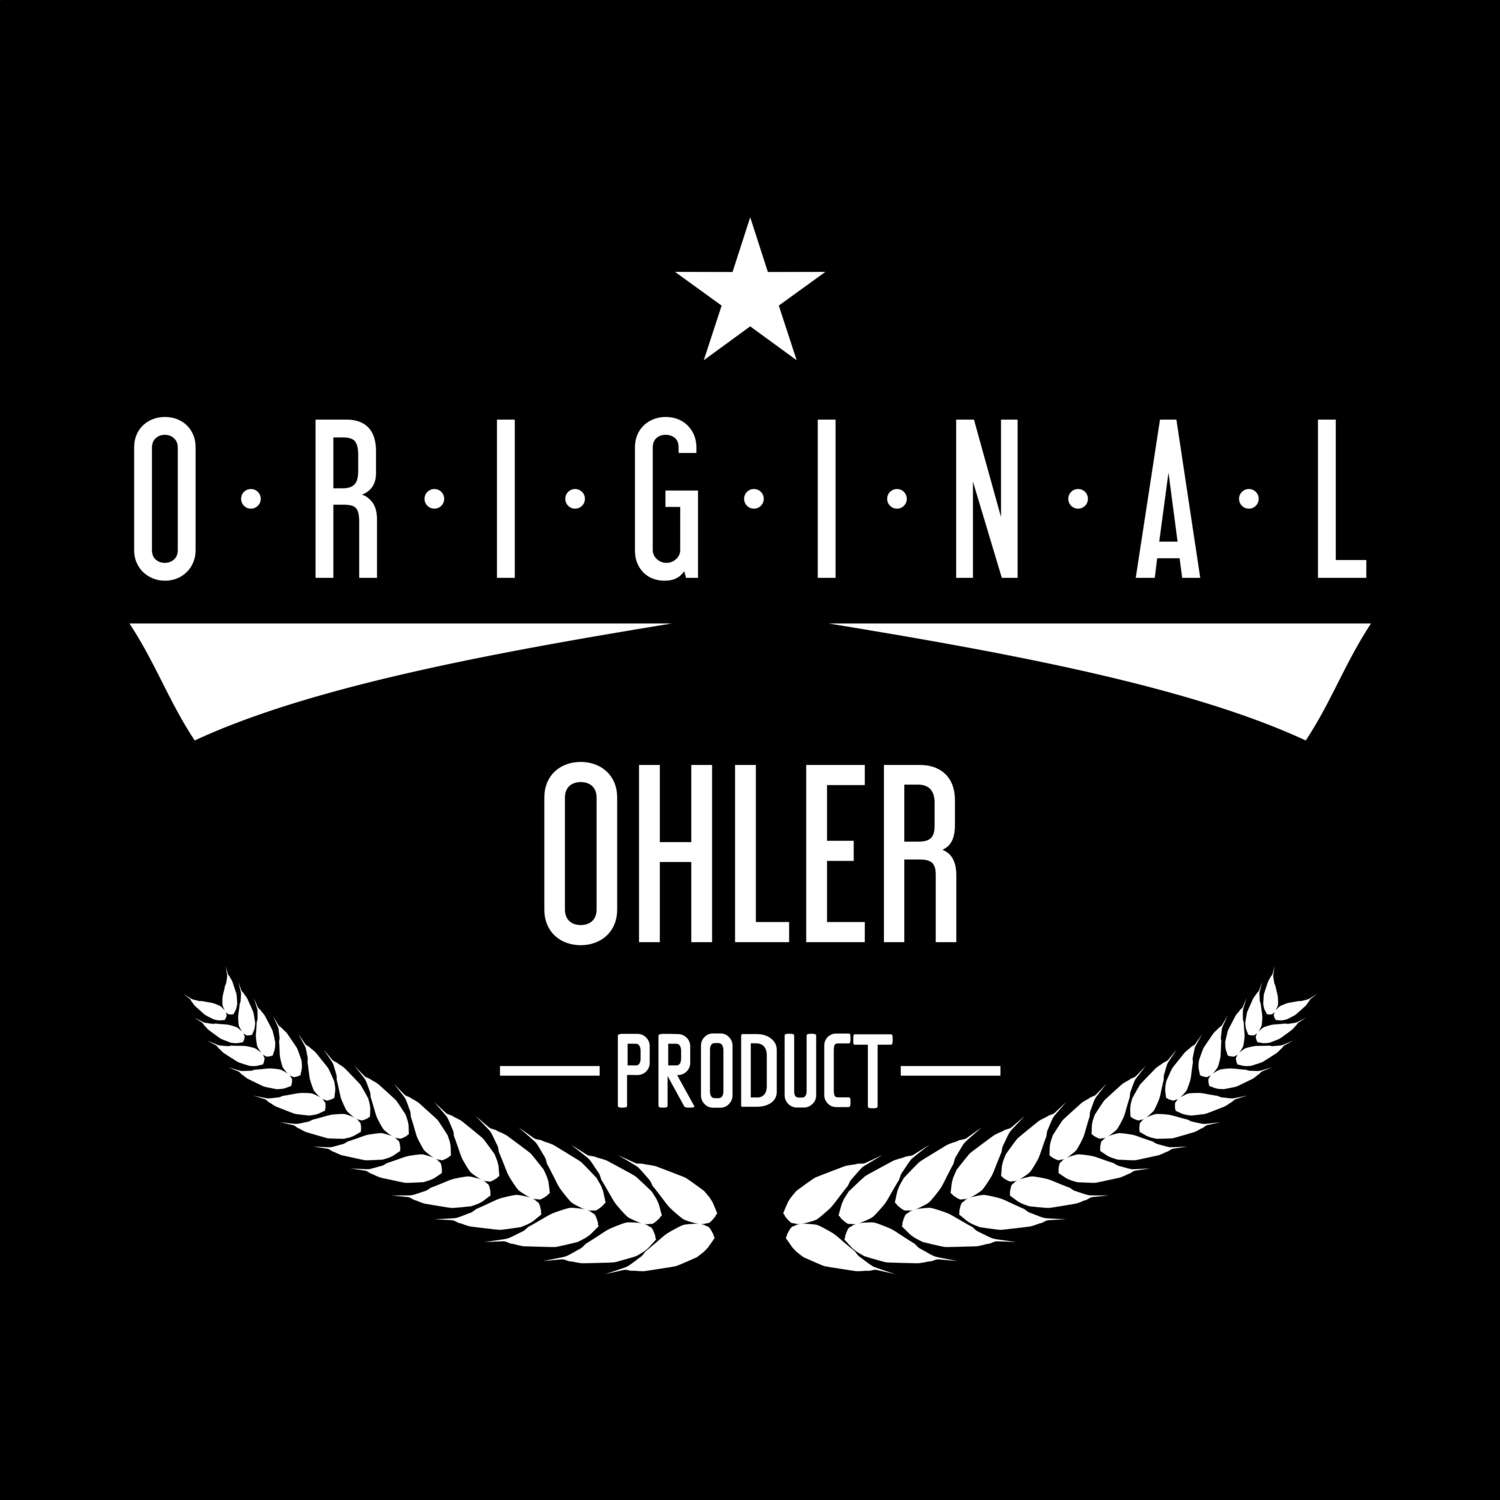 Ohler T-Shirt »Original Product«